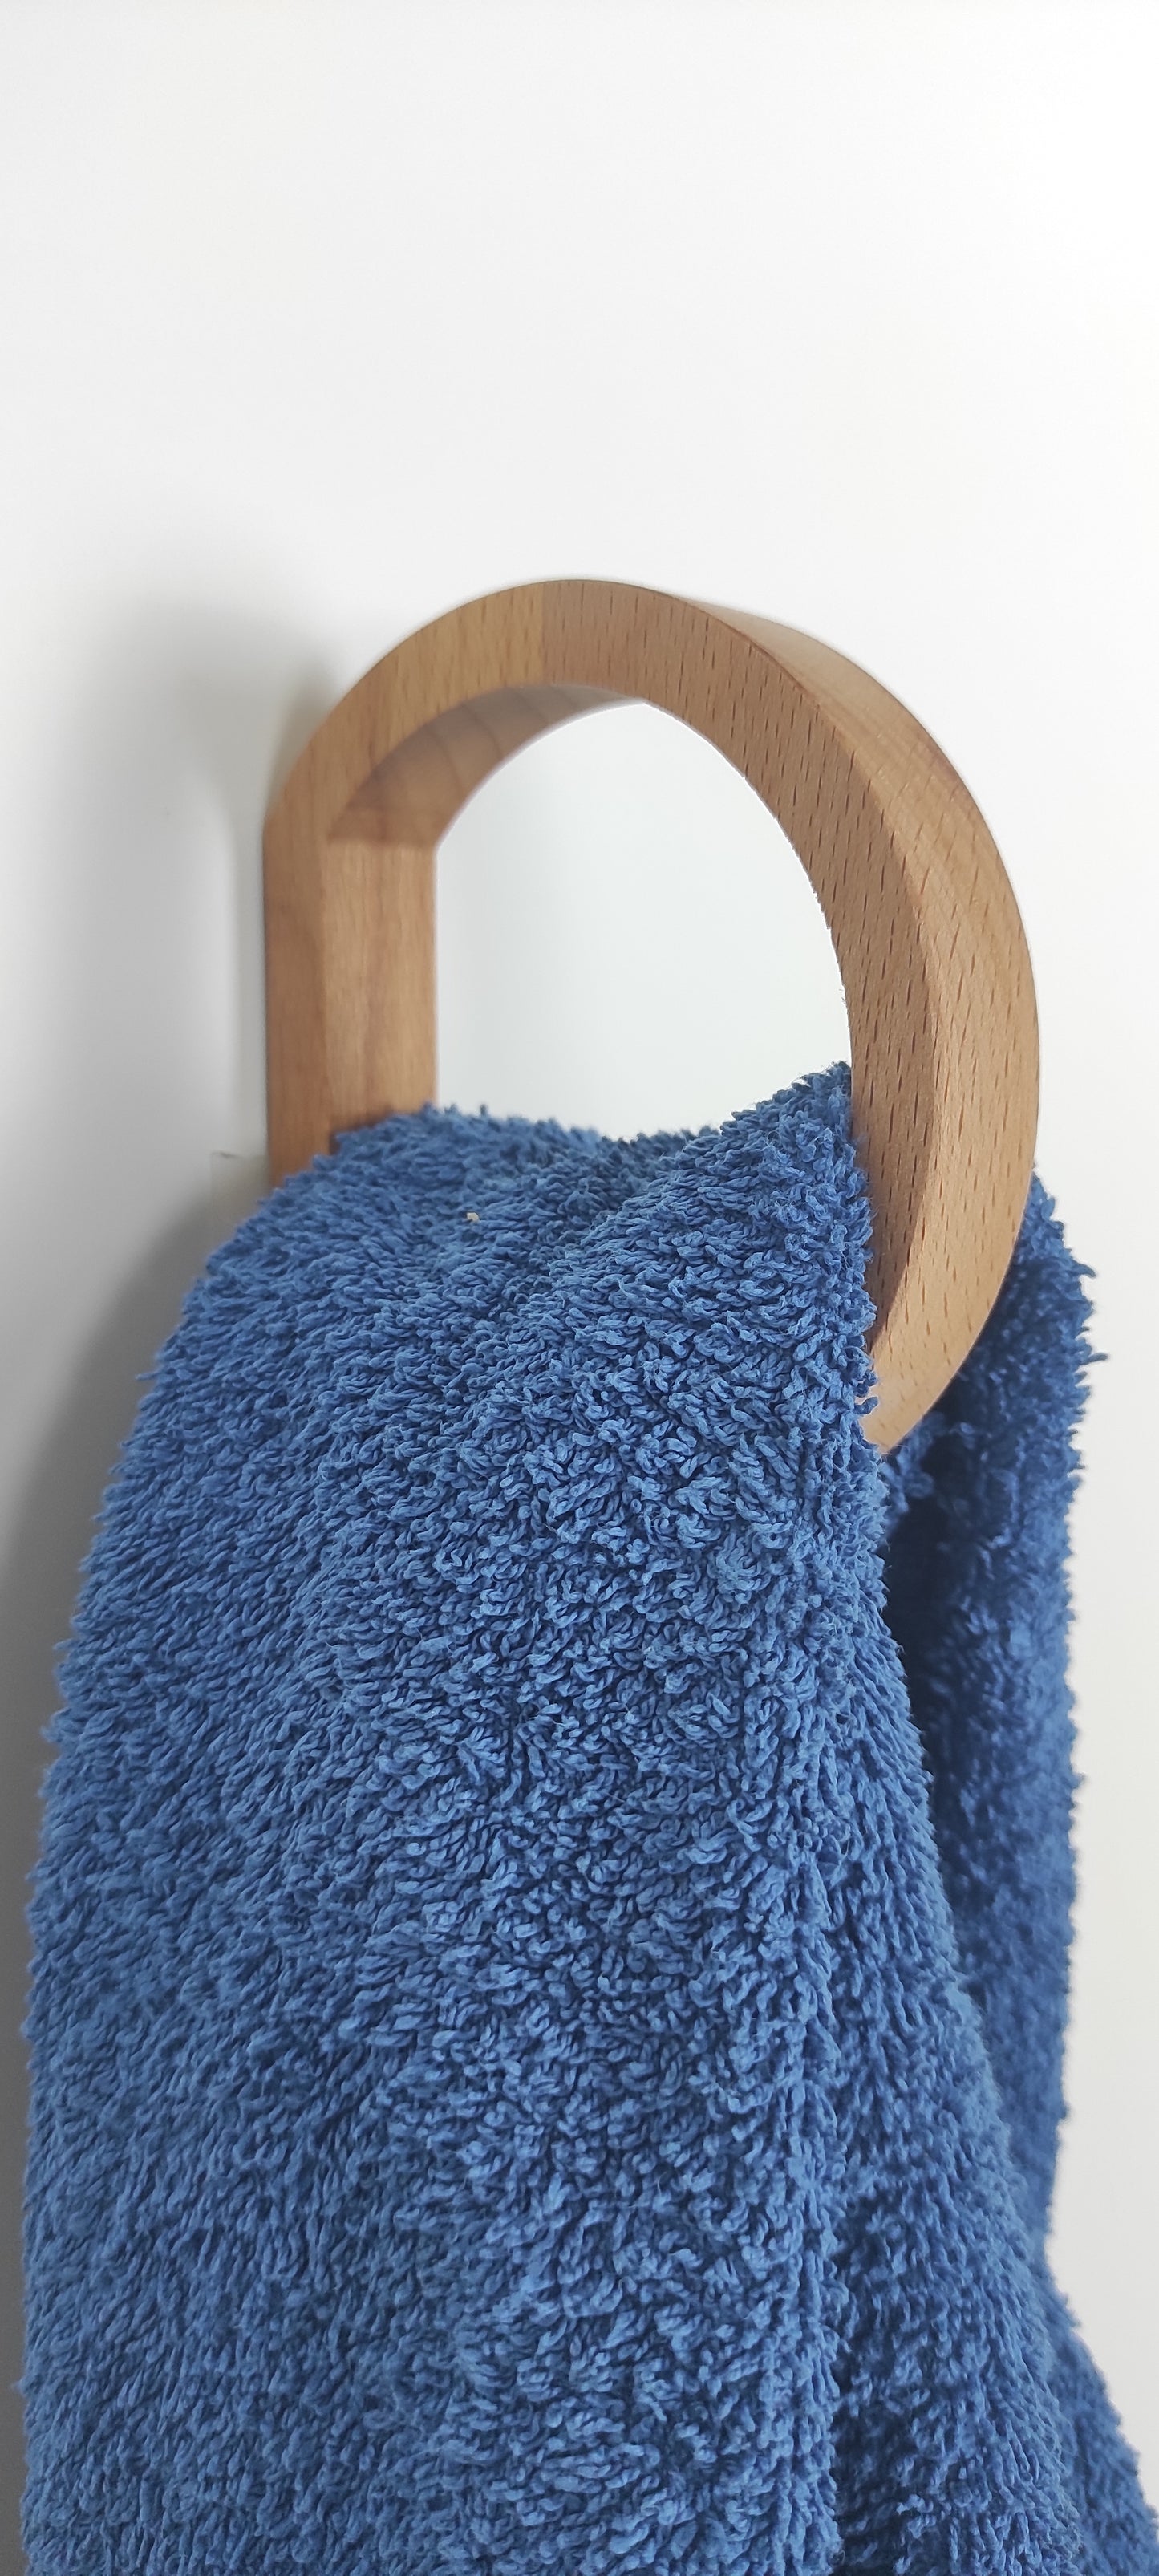 Handtuchring, Handtuchhalter aus Holz